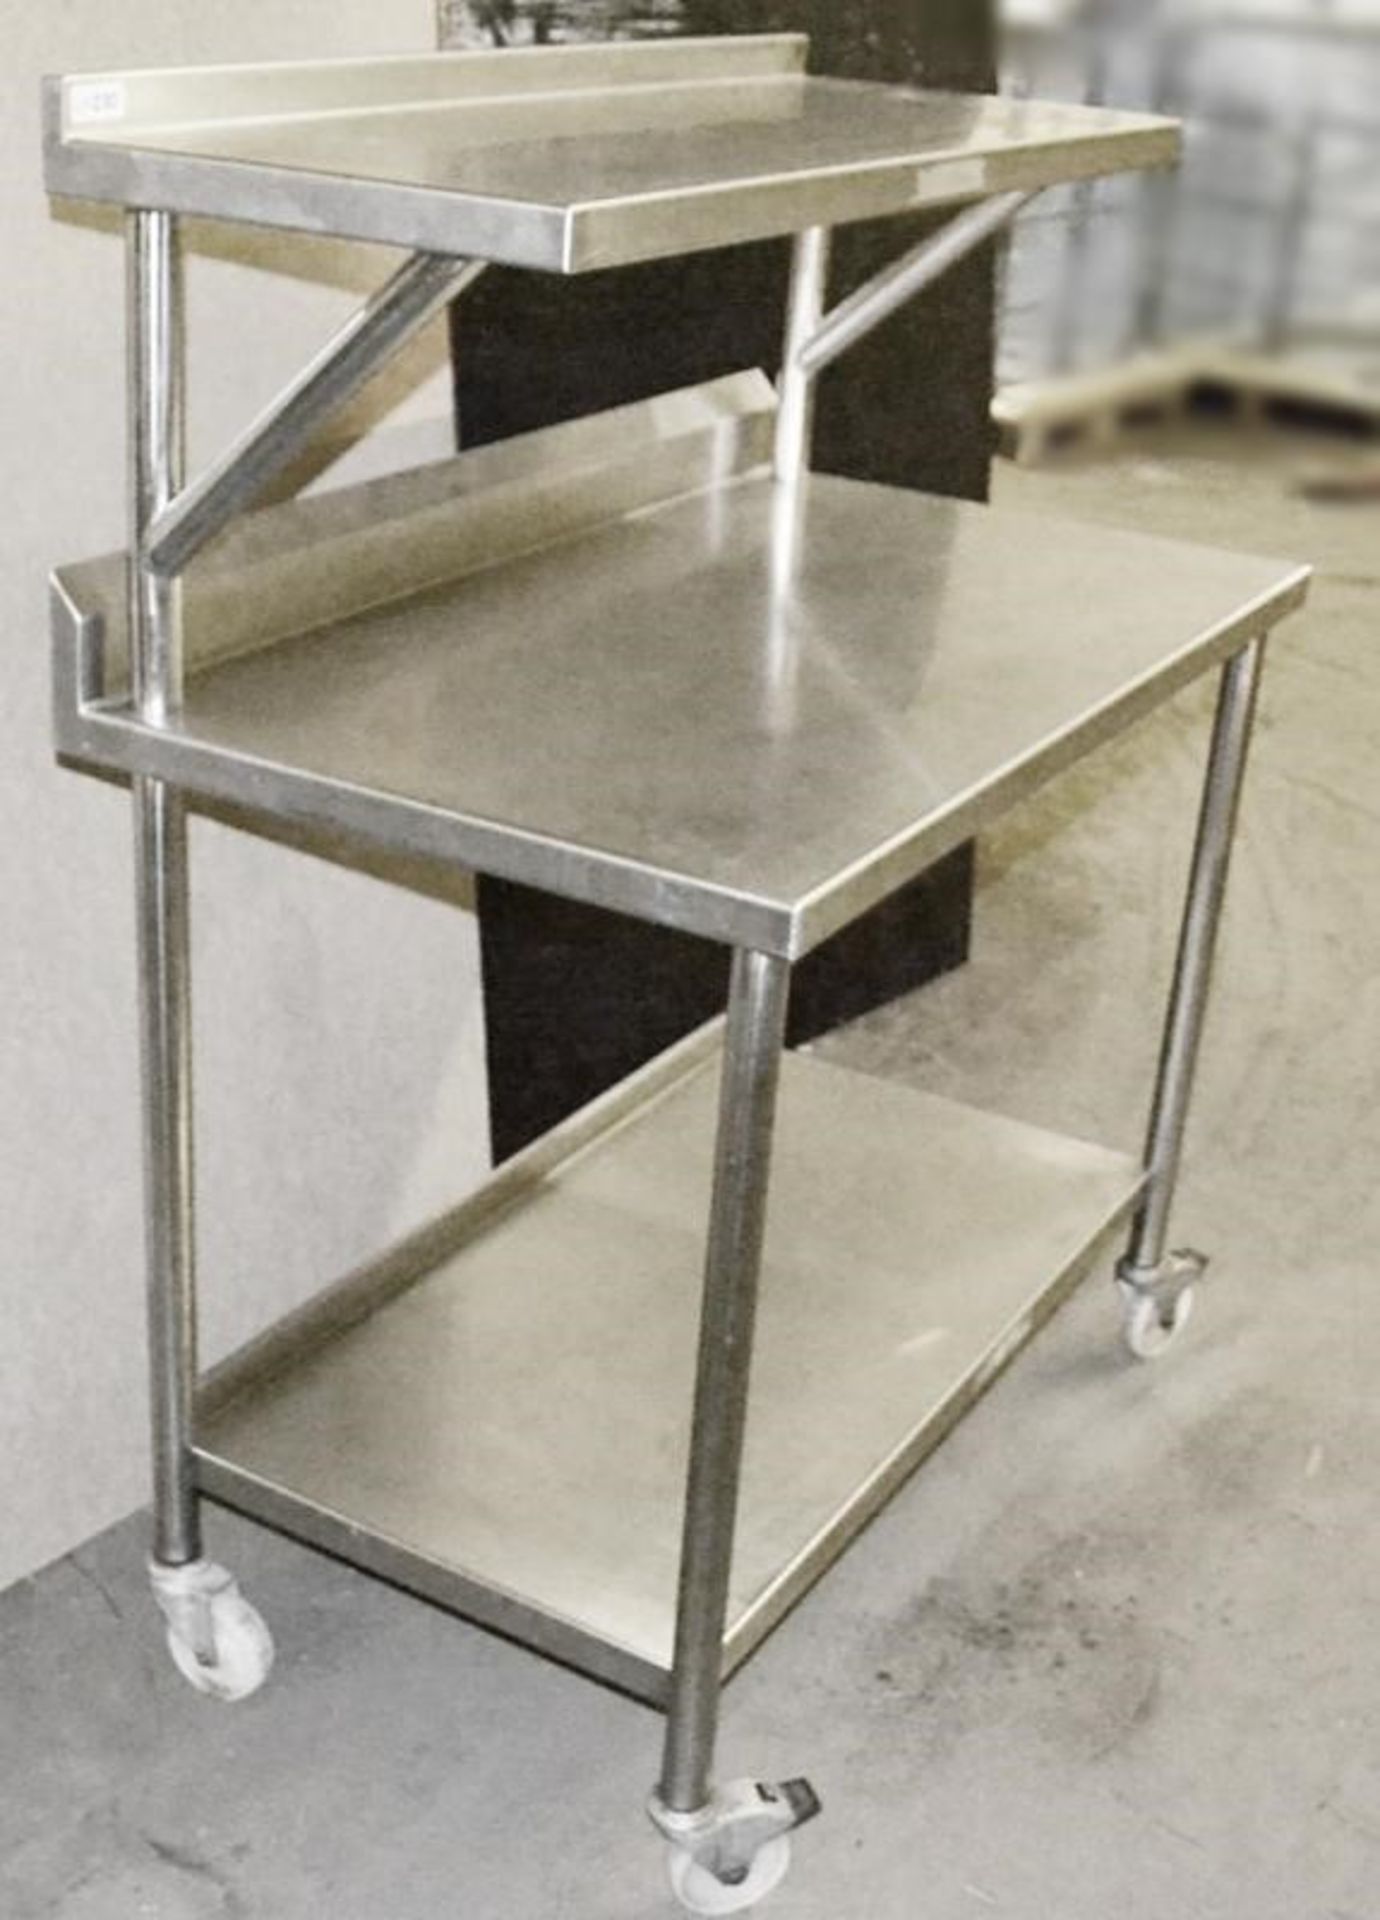 1 x Stainless Steel Commercial 3-Tier Shelving Unit On Castors - Dimensions: W108 x H134 x D62cm - C - Image 2 of 4